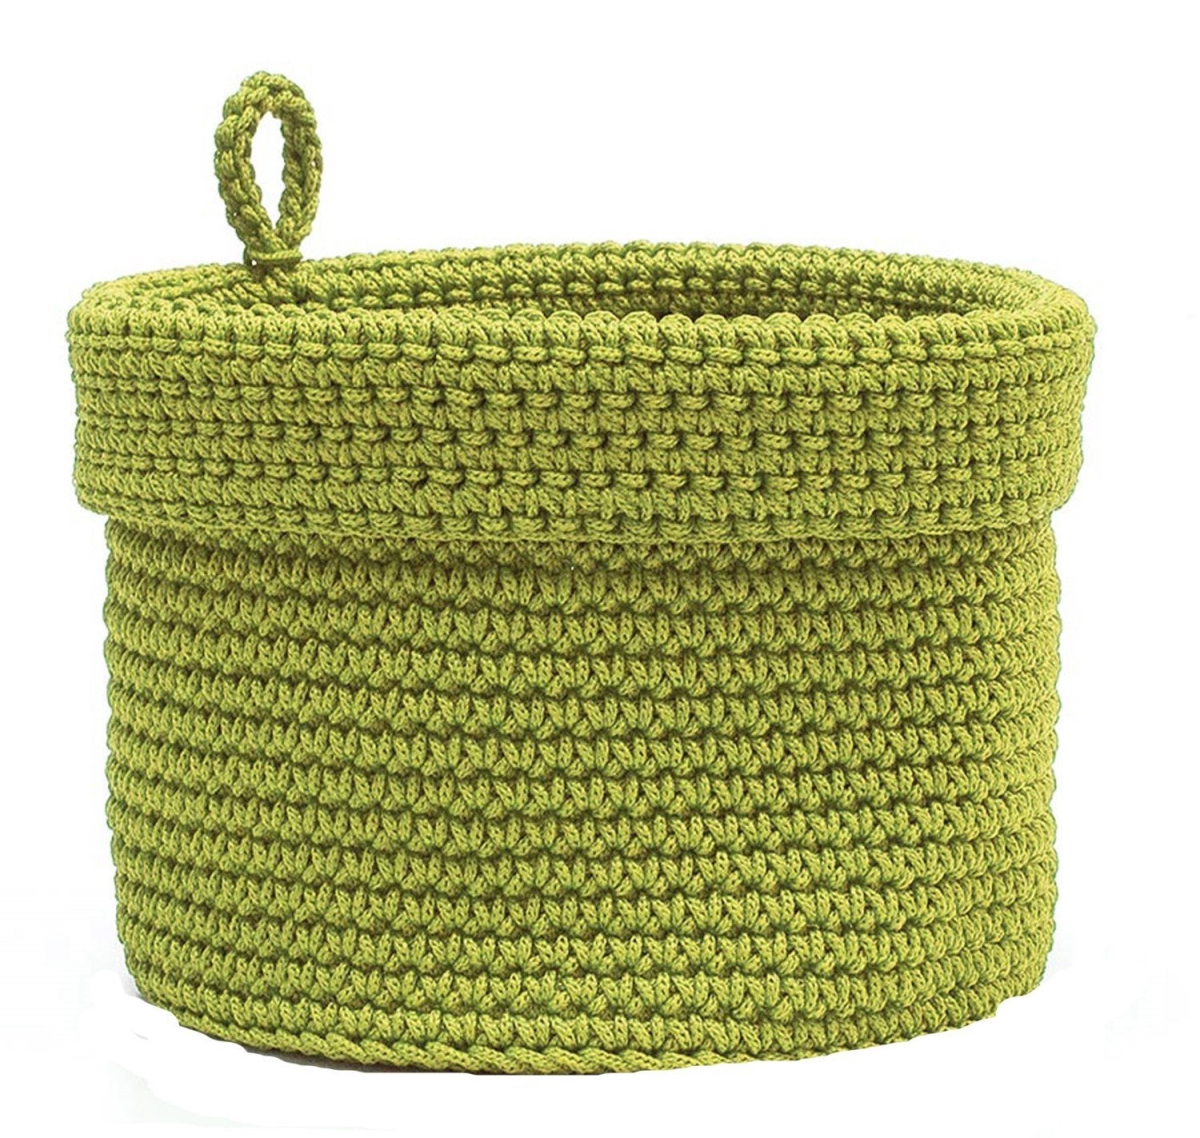 Mc-1040cg Mode Crochet 10 X 10 In. Basket With Loop - Citron Green